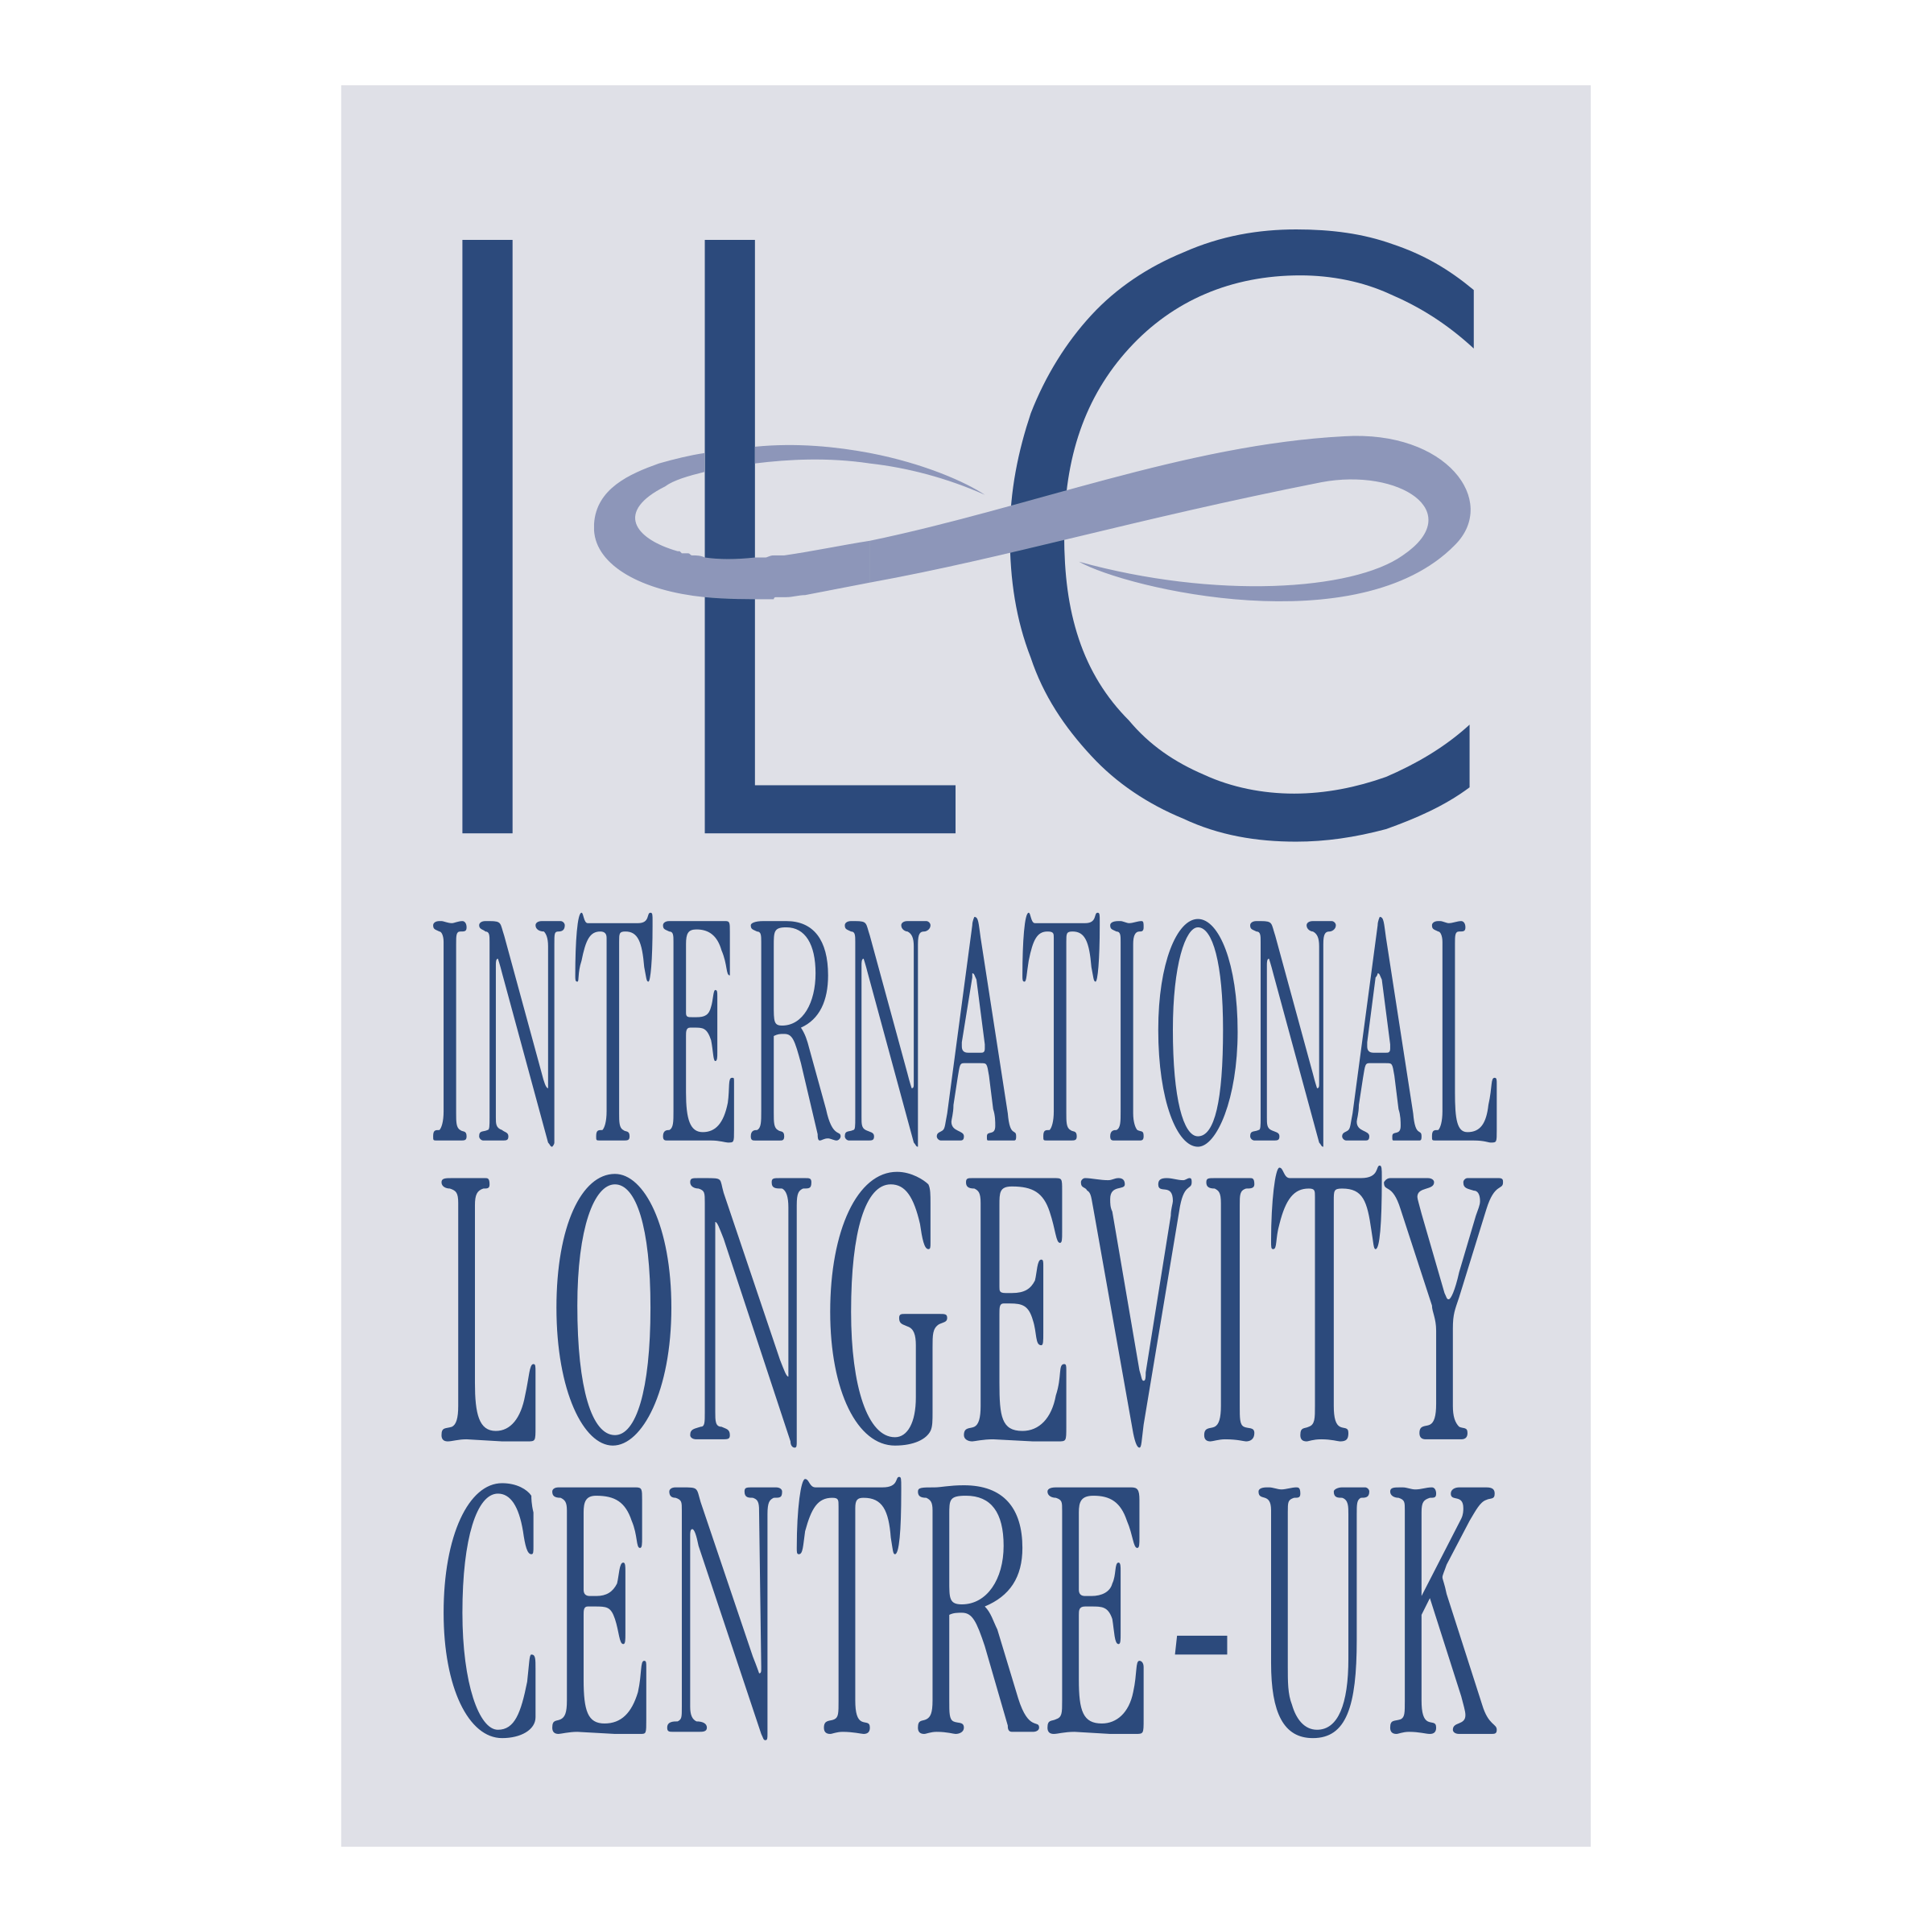 ILC Logo - ILC Logo PNG Transparent & SVG Vector